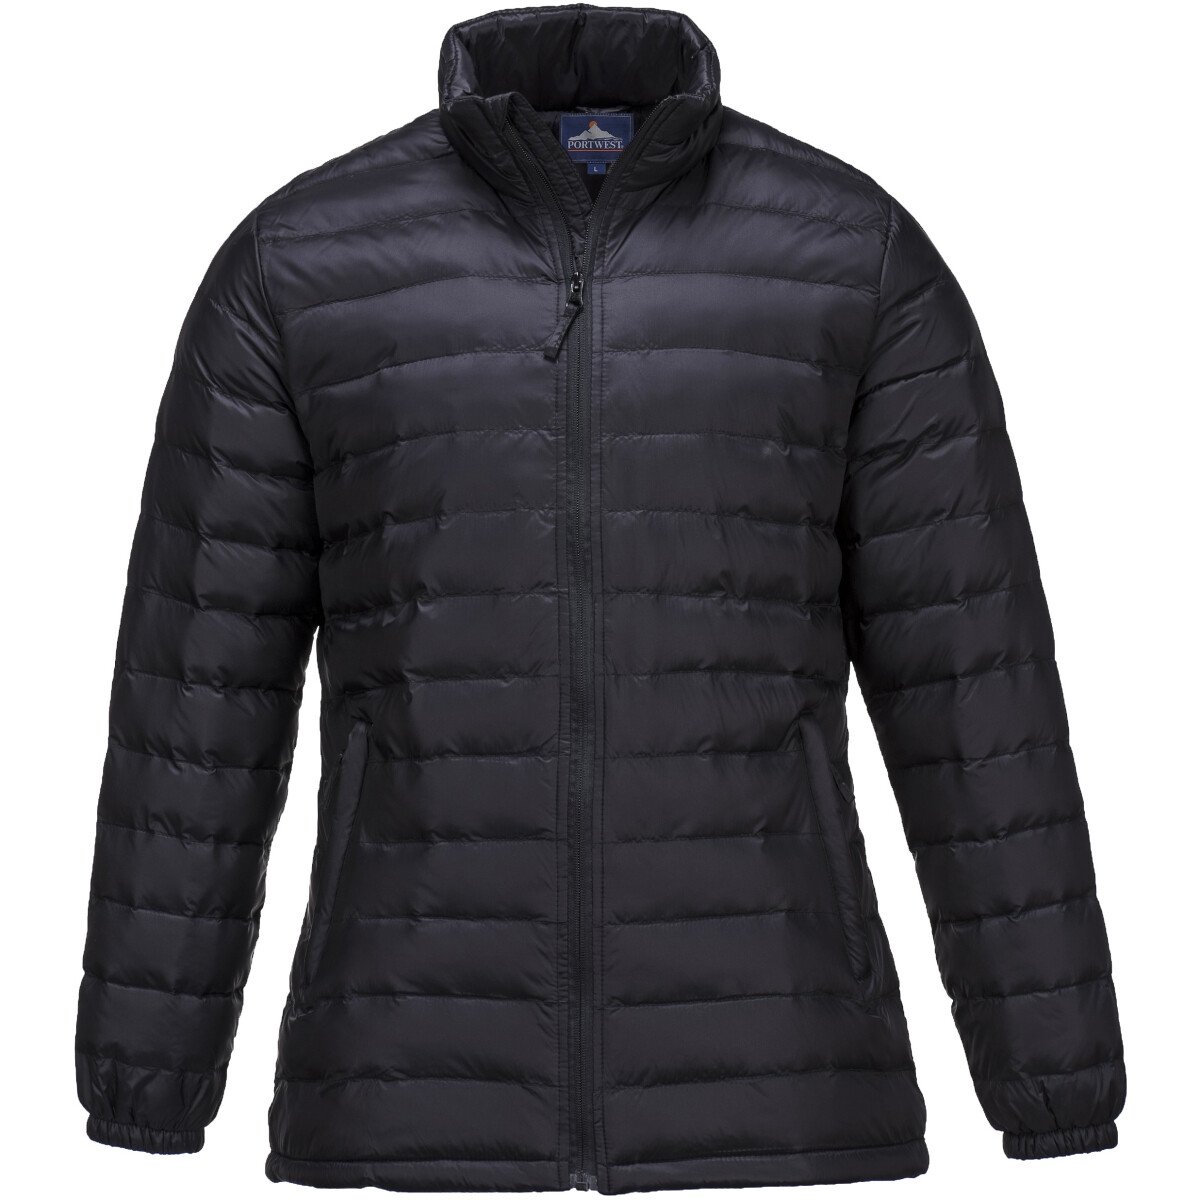 Portwest S545 Aspen Ladies Jacket Insulatex Rainwear